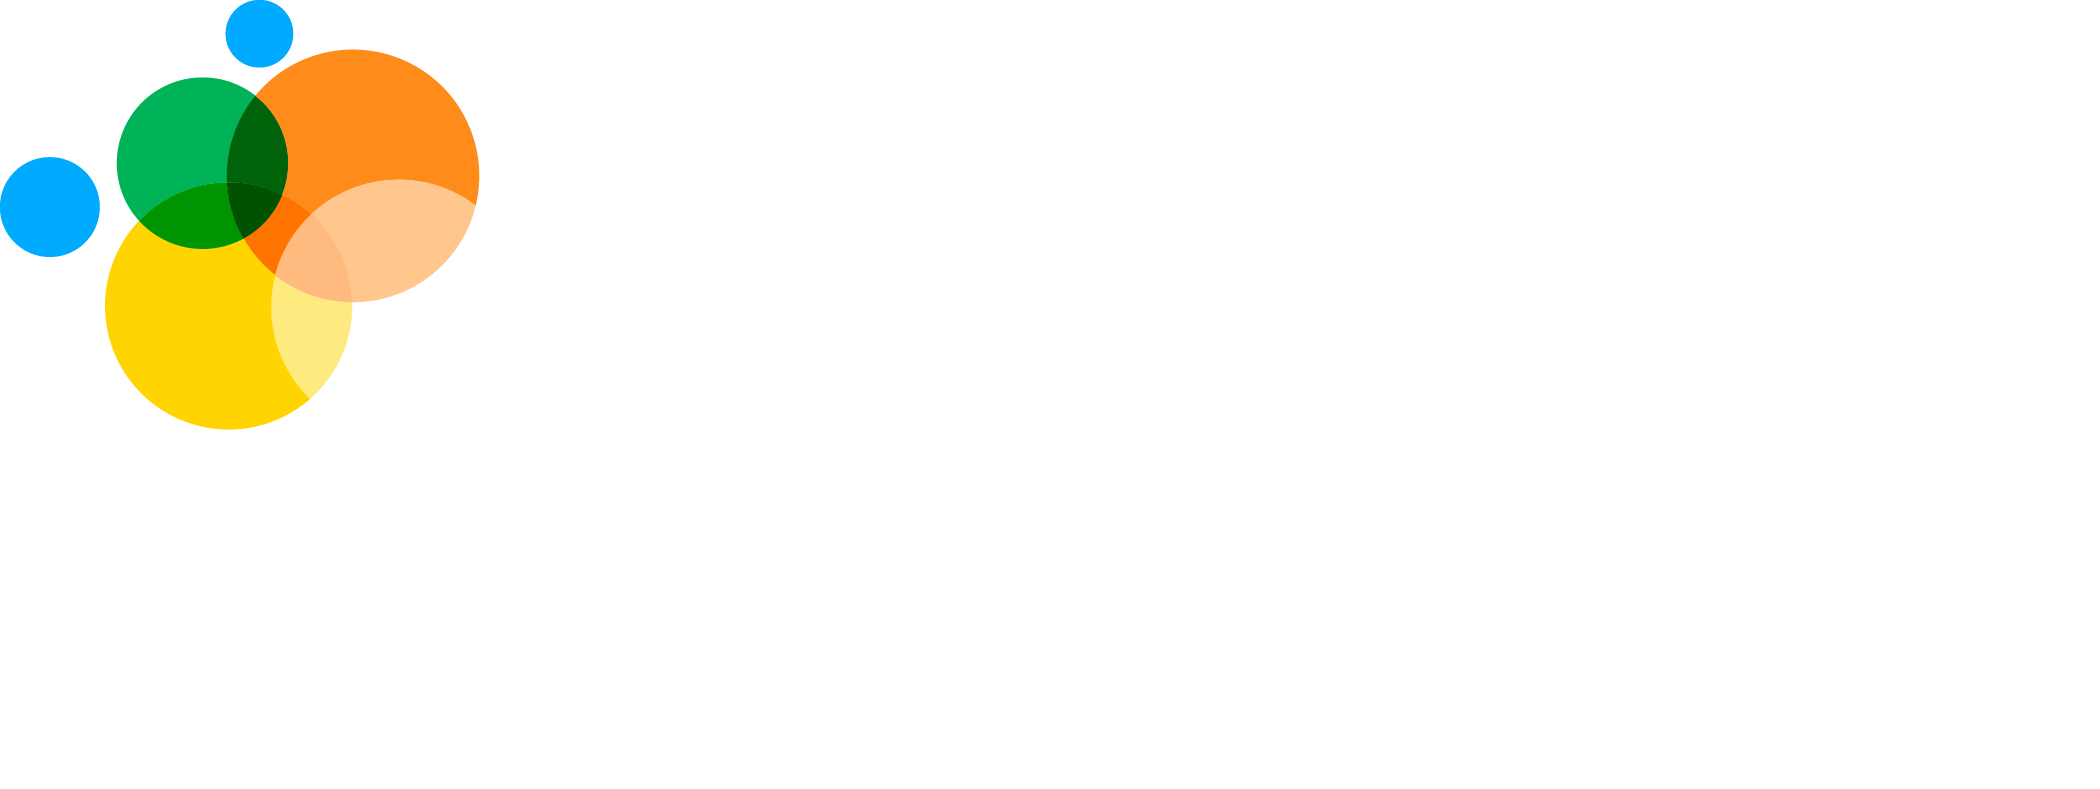 “OpenX”